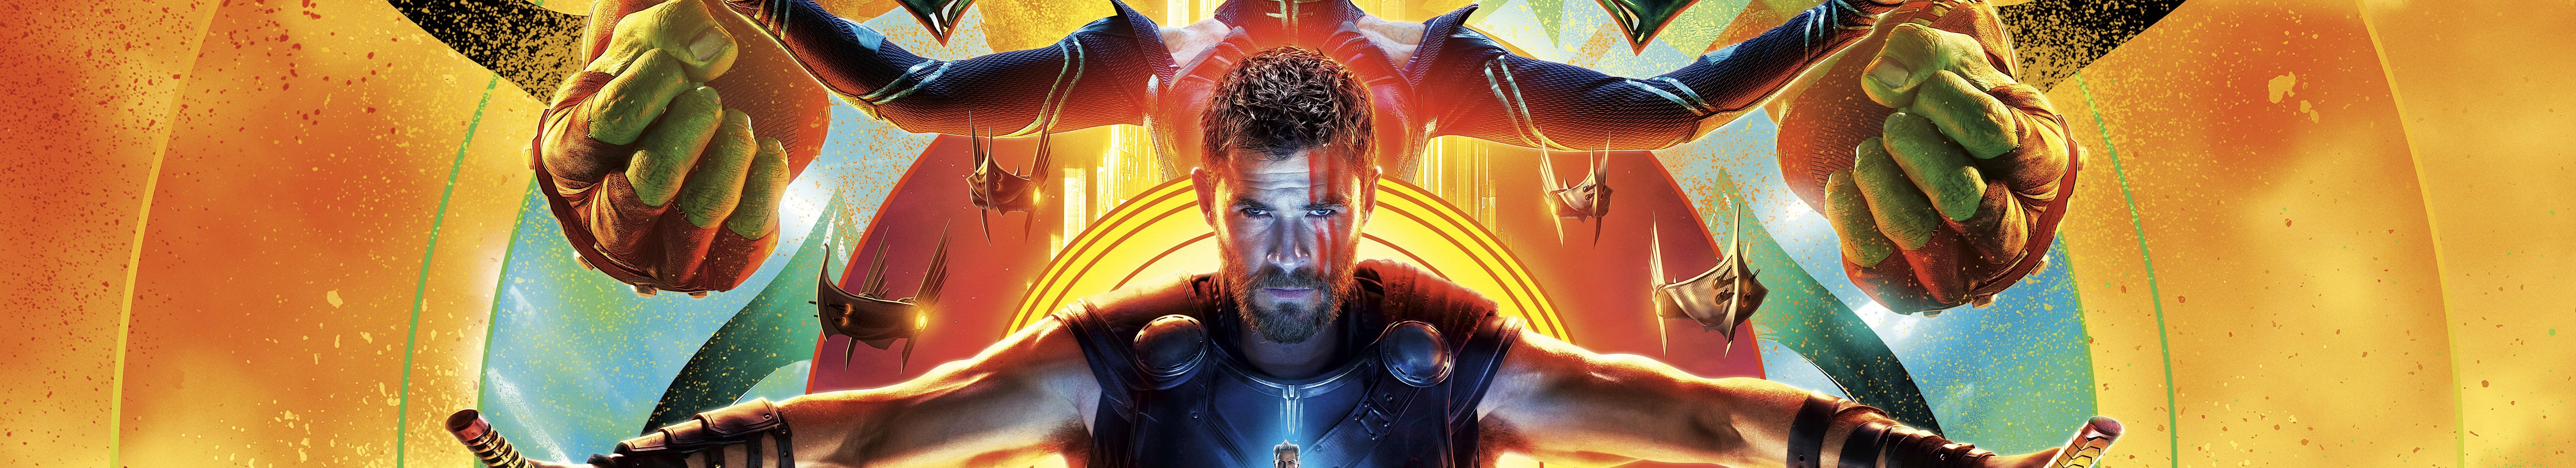 Thor Ragnarok Poster Three Screen Background